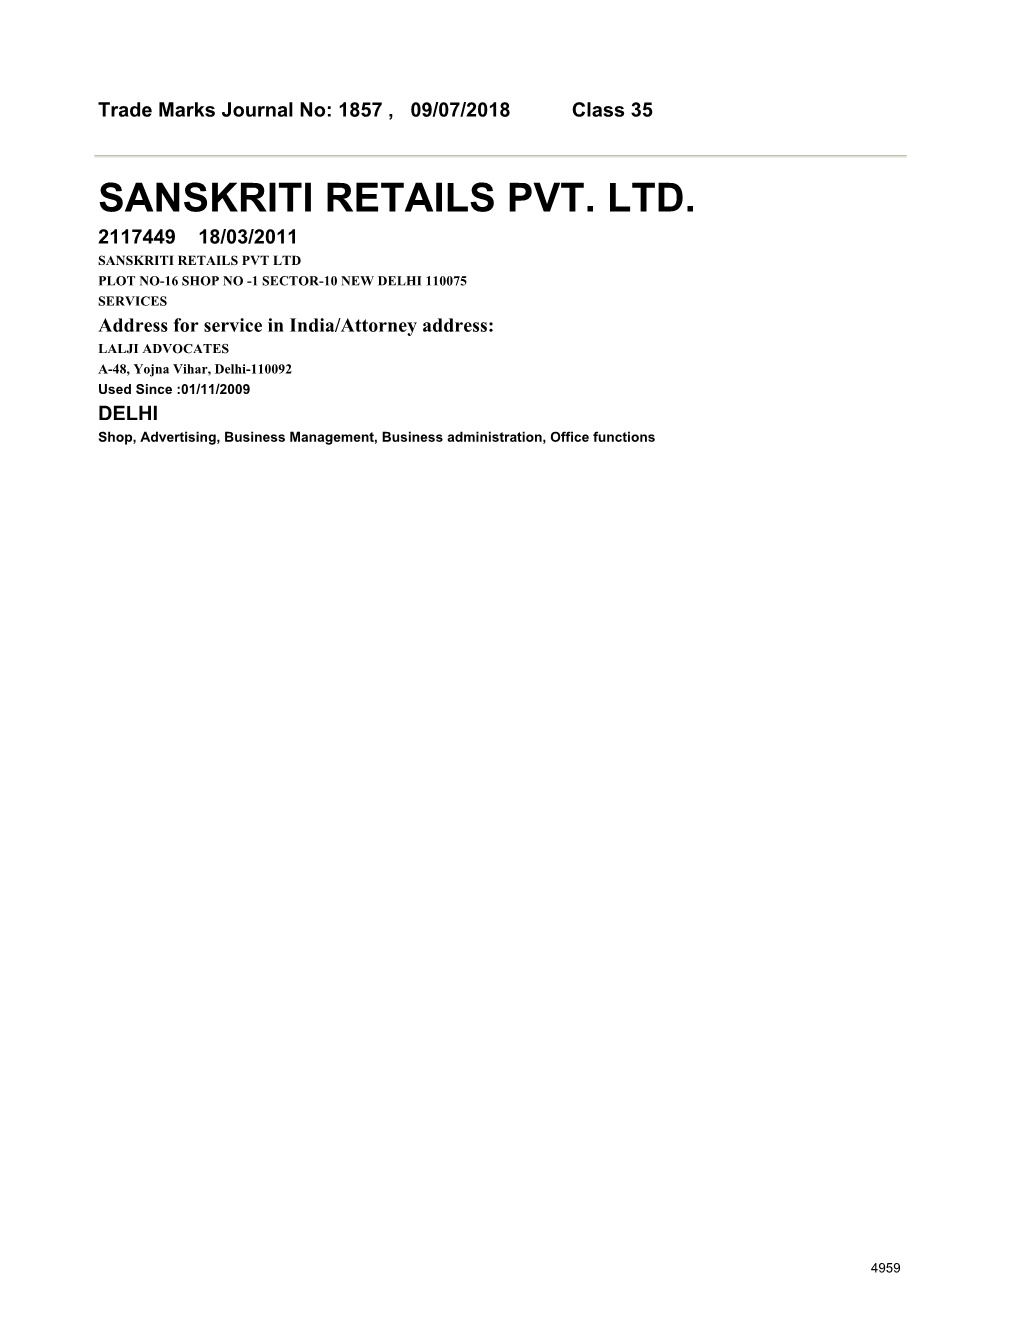 Sanskriti Retails Pvt. Ltd